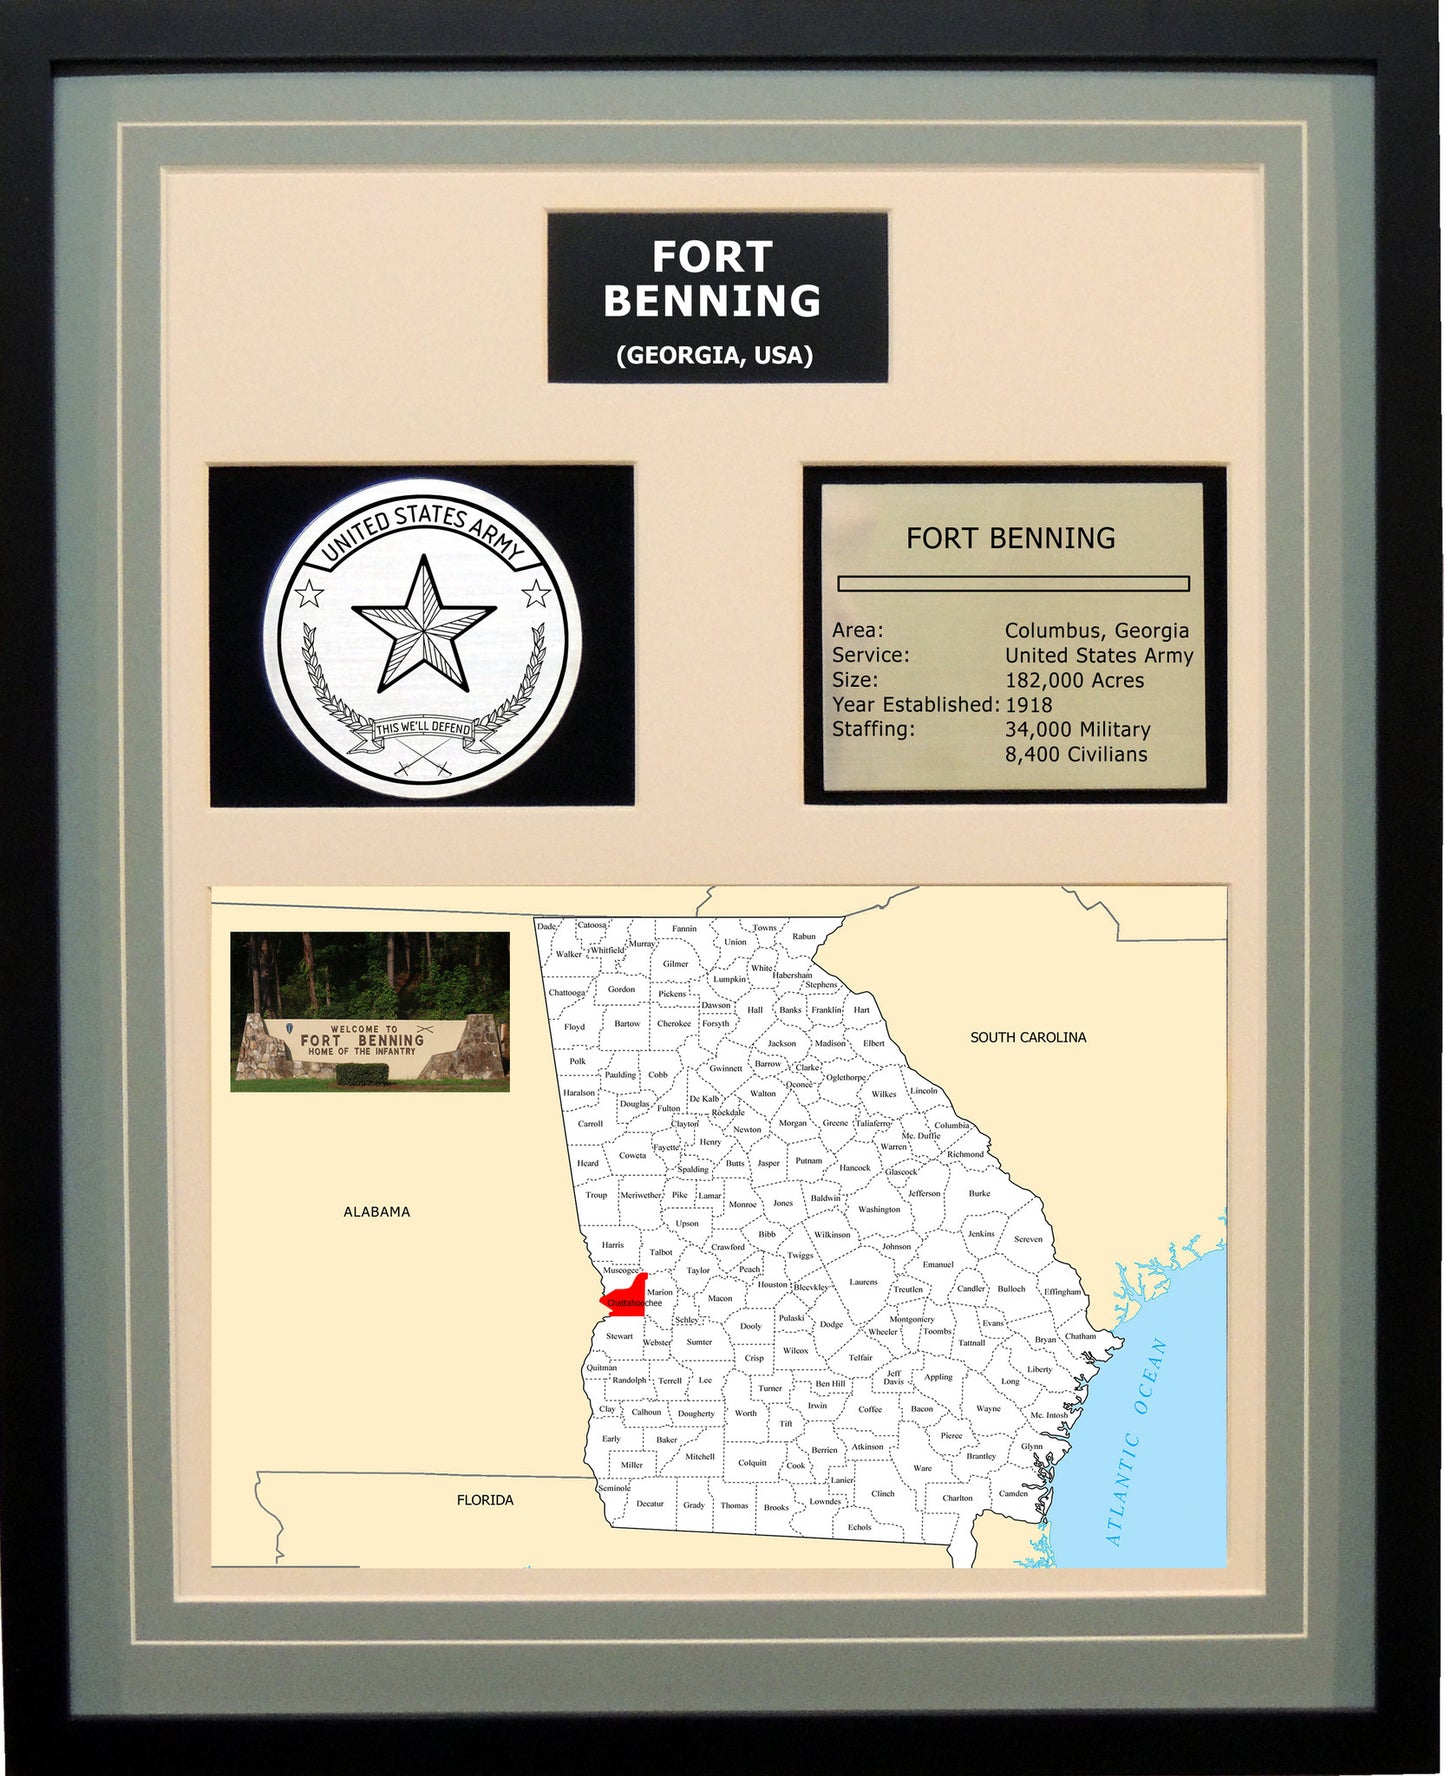 Fort Benning - Framed Army Base Photo Plaque